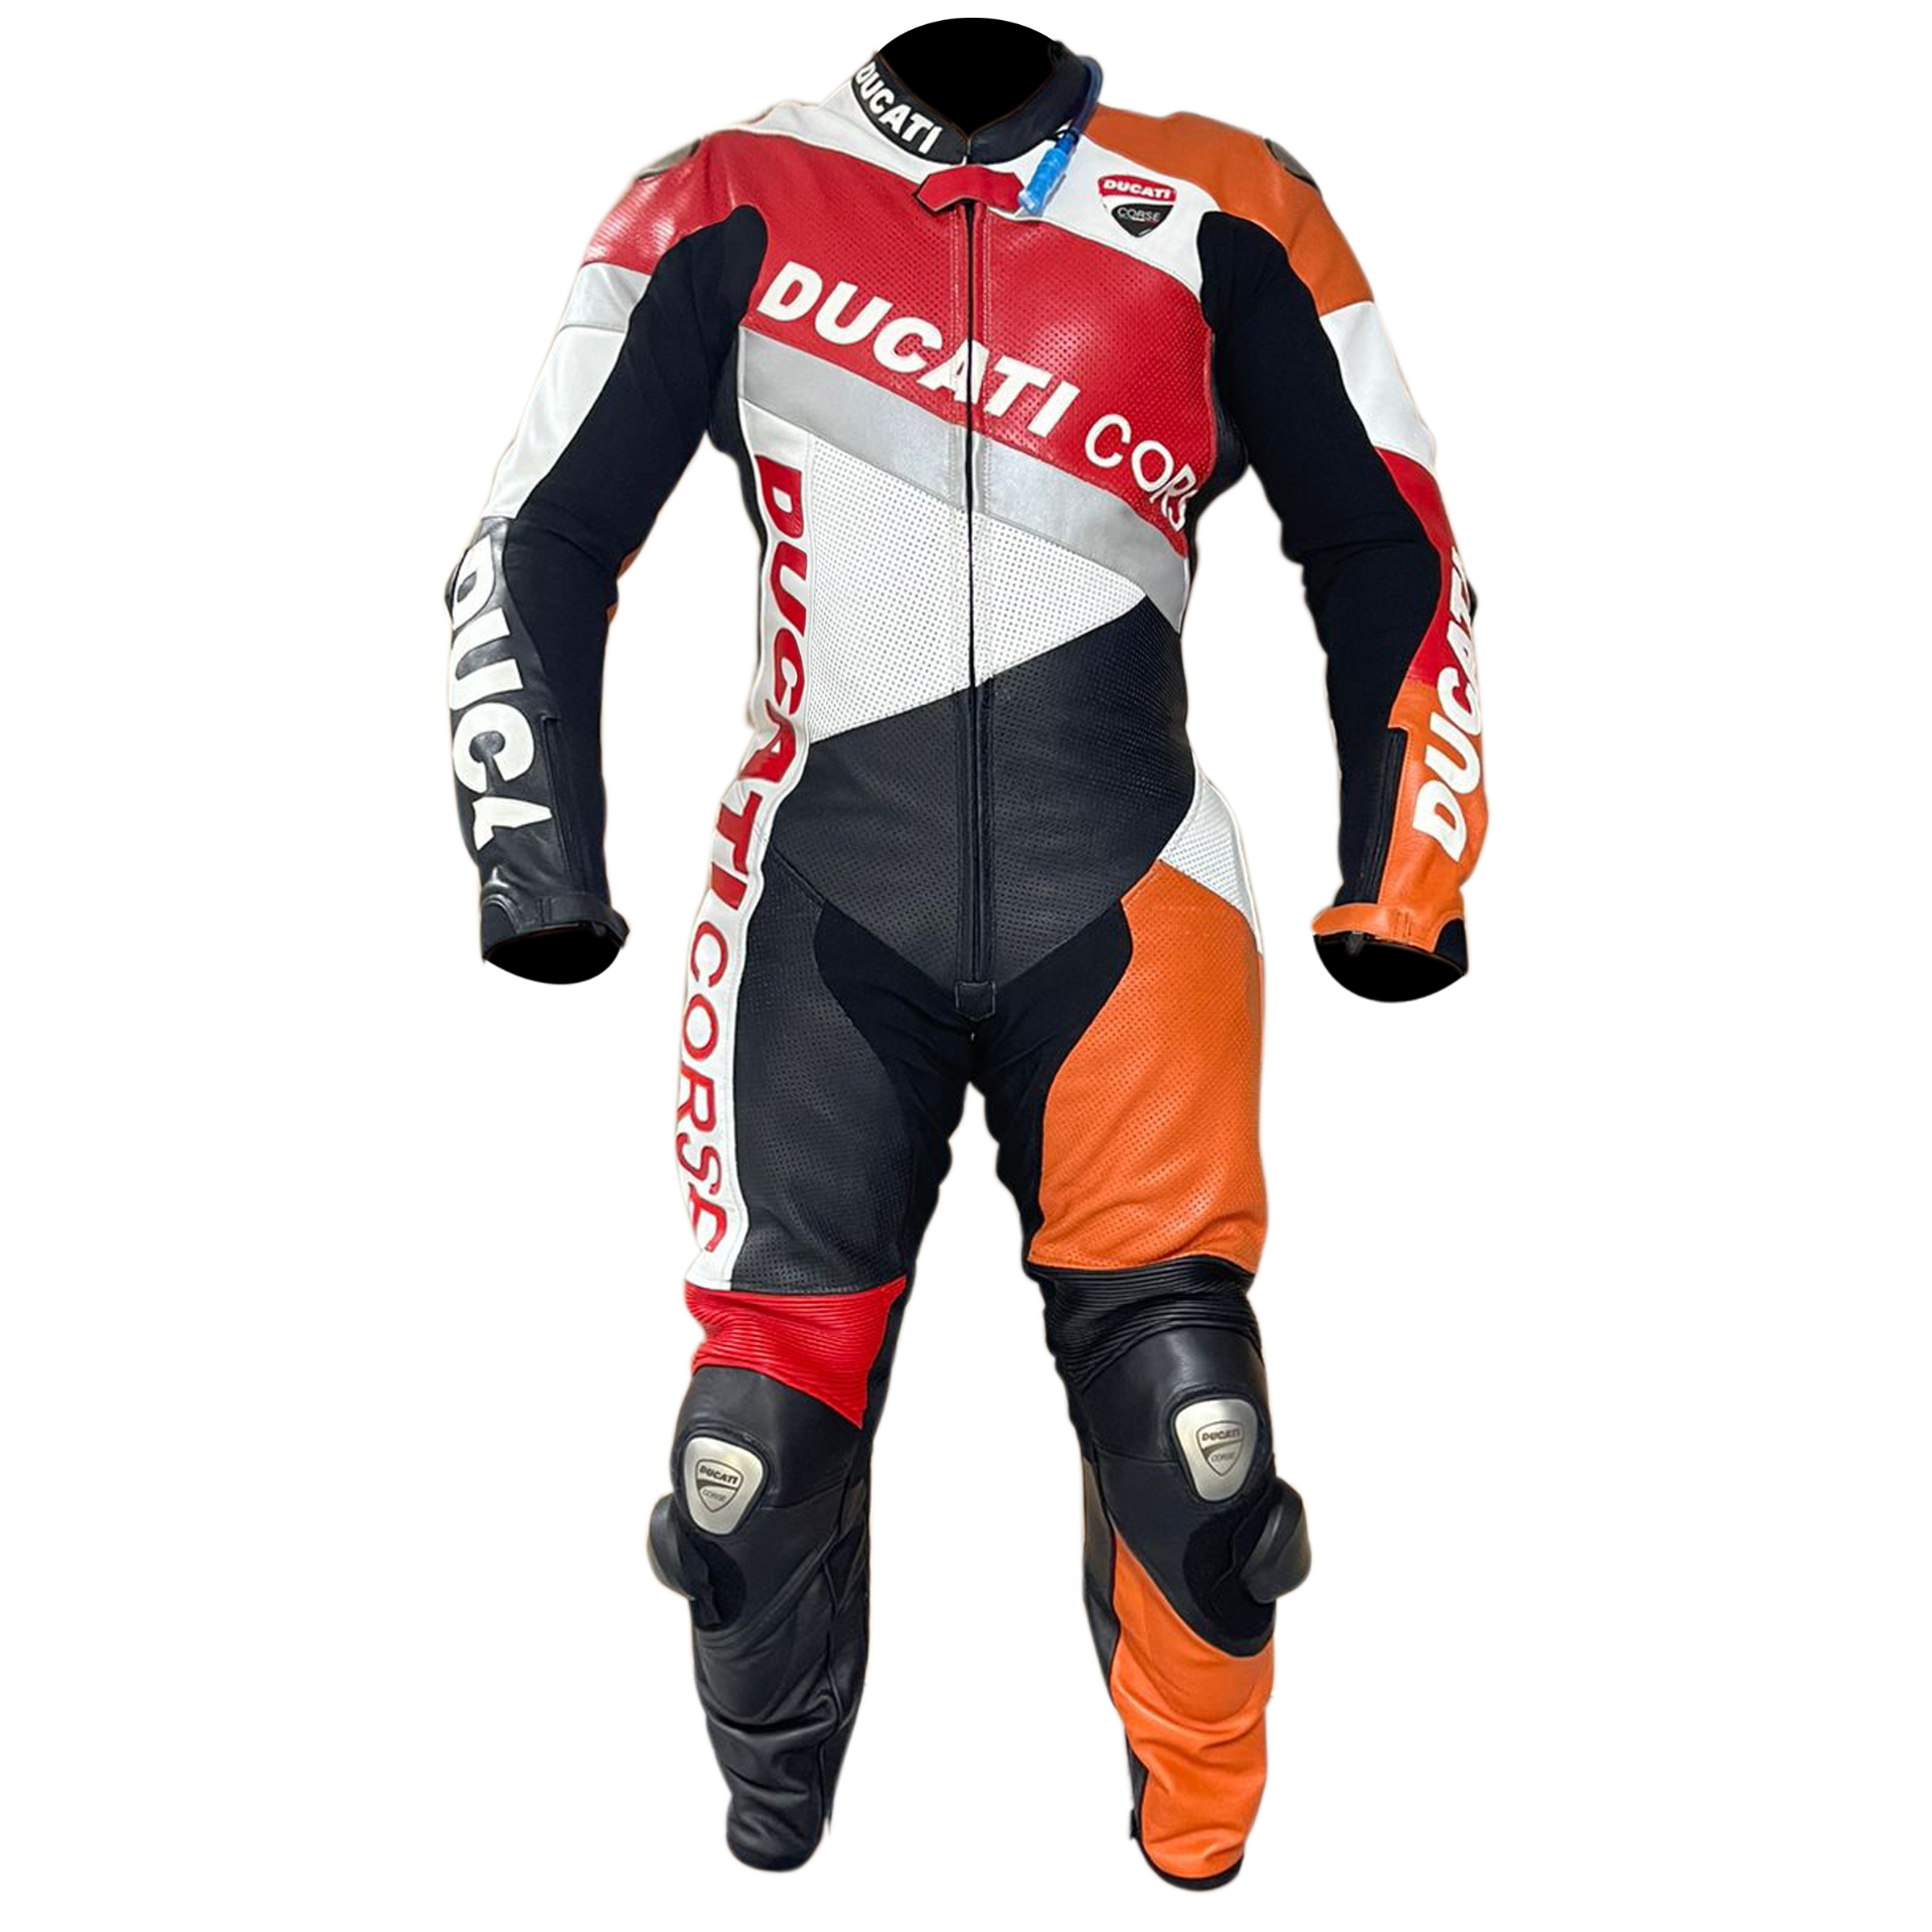 Ducati Corse Power K2 Racing suit